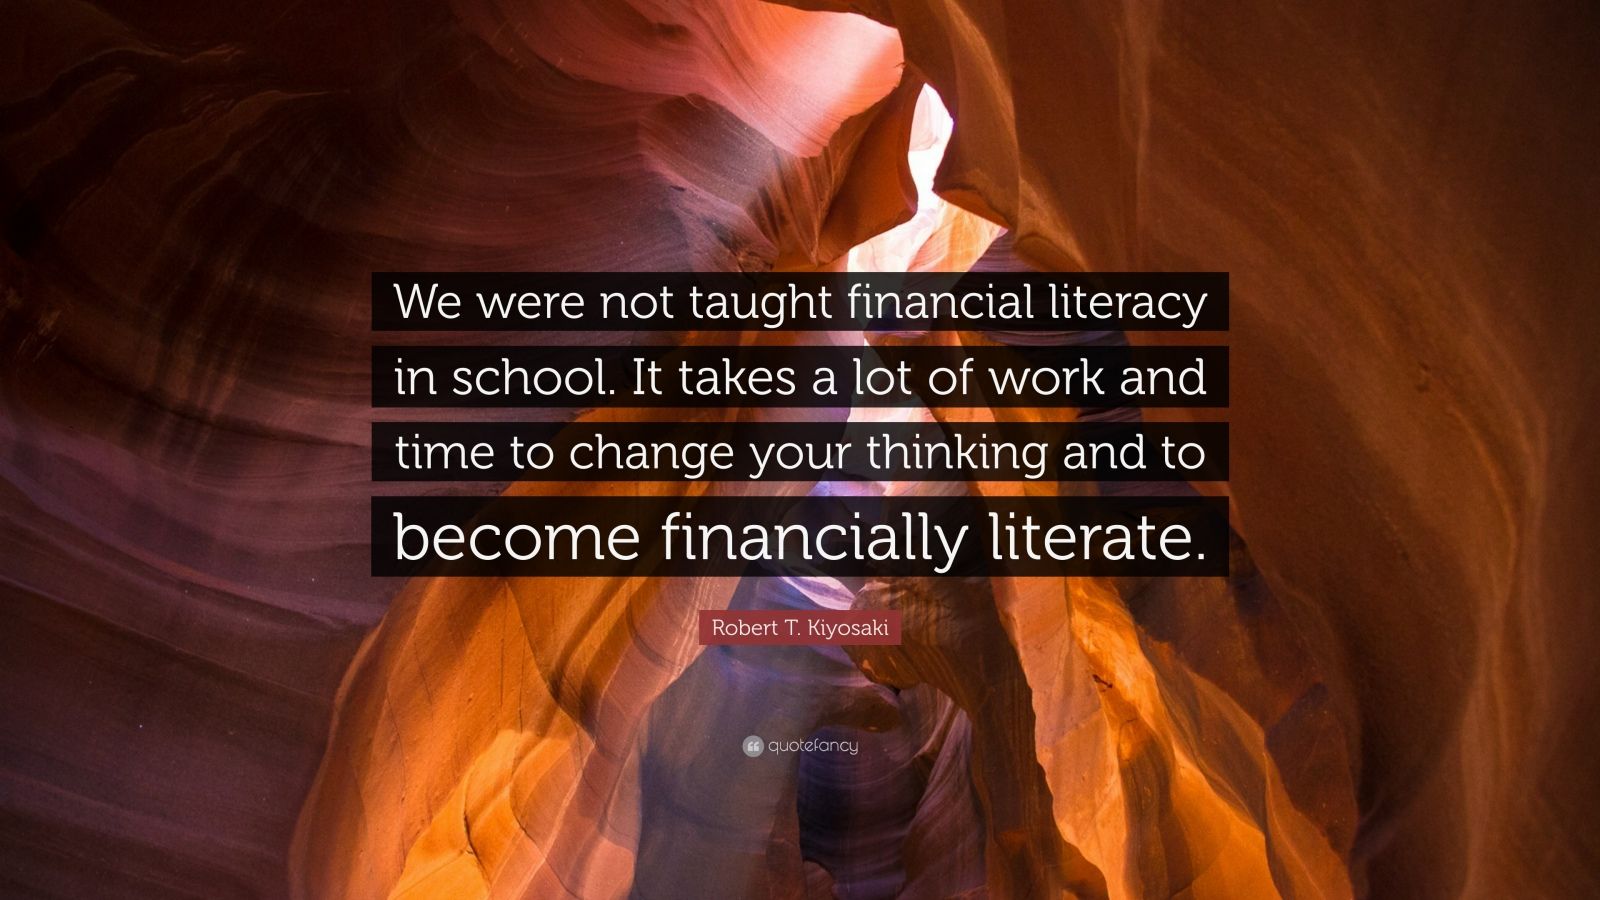 1753562 Robert T Kiyosaki Quote We were not taught financial literacy in